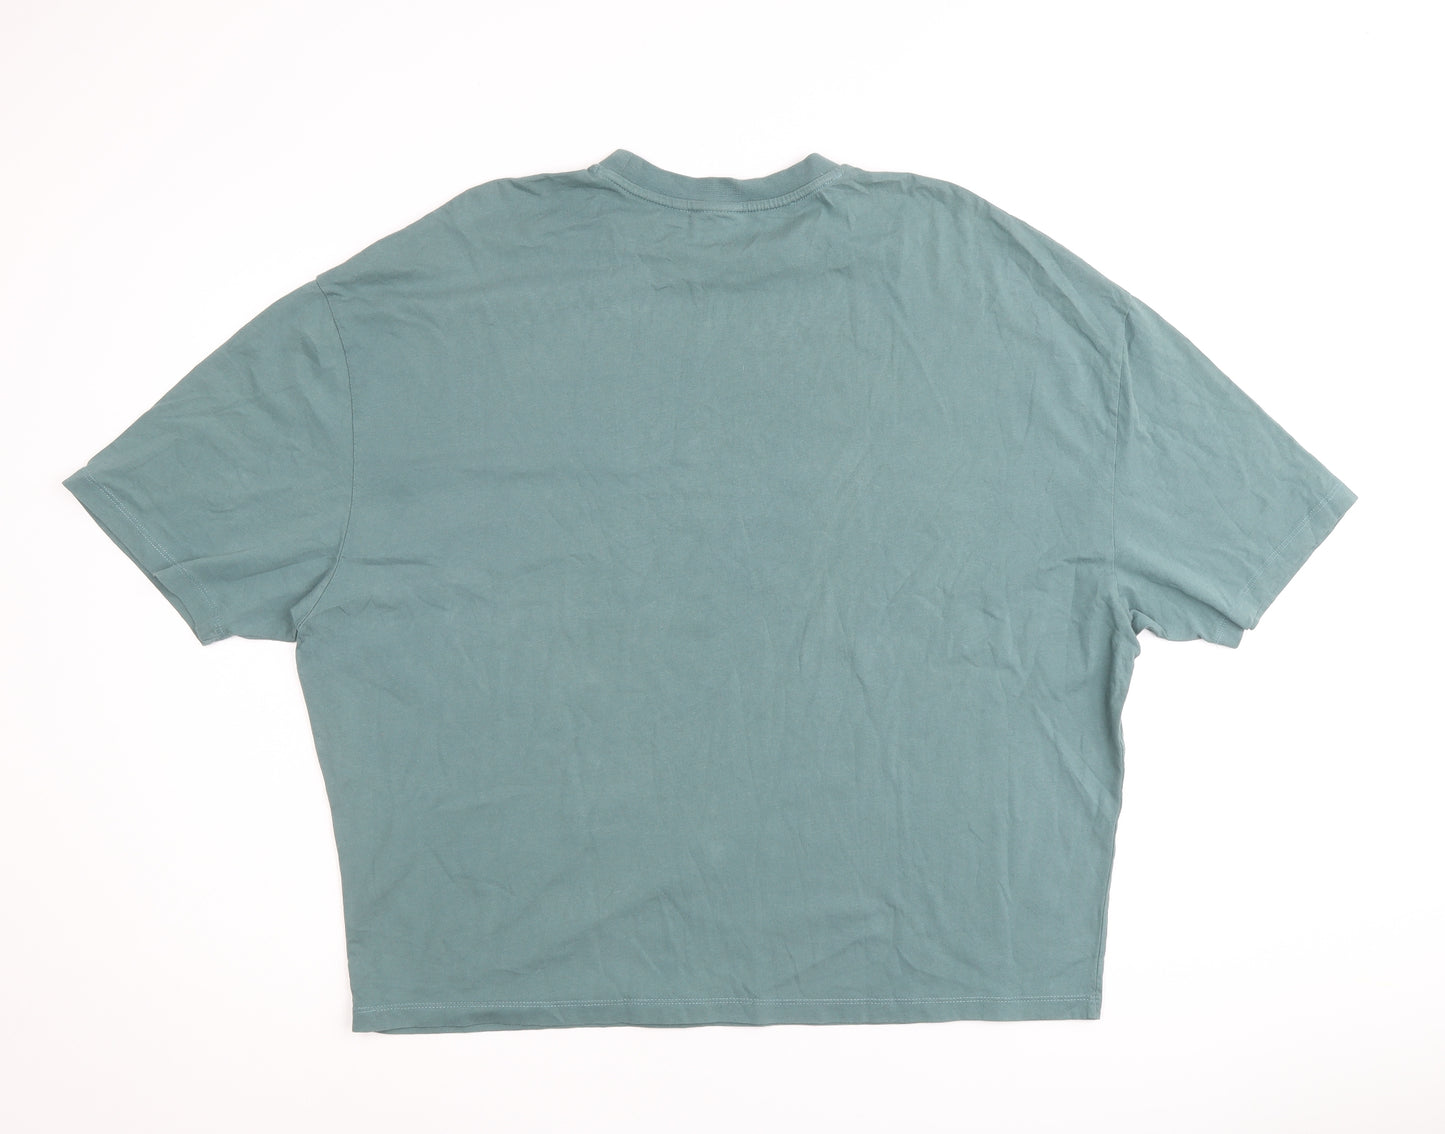 ASOS Womens Green Cotton Basic T-Shirt Size L Crew Neck